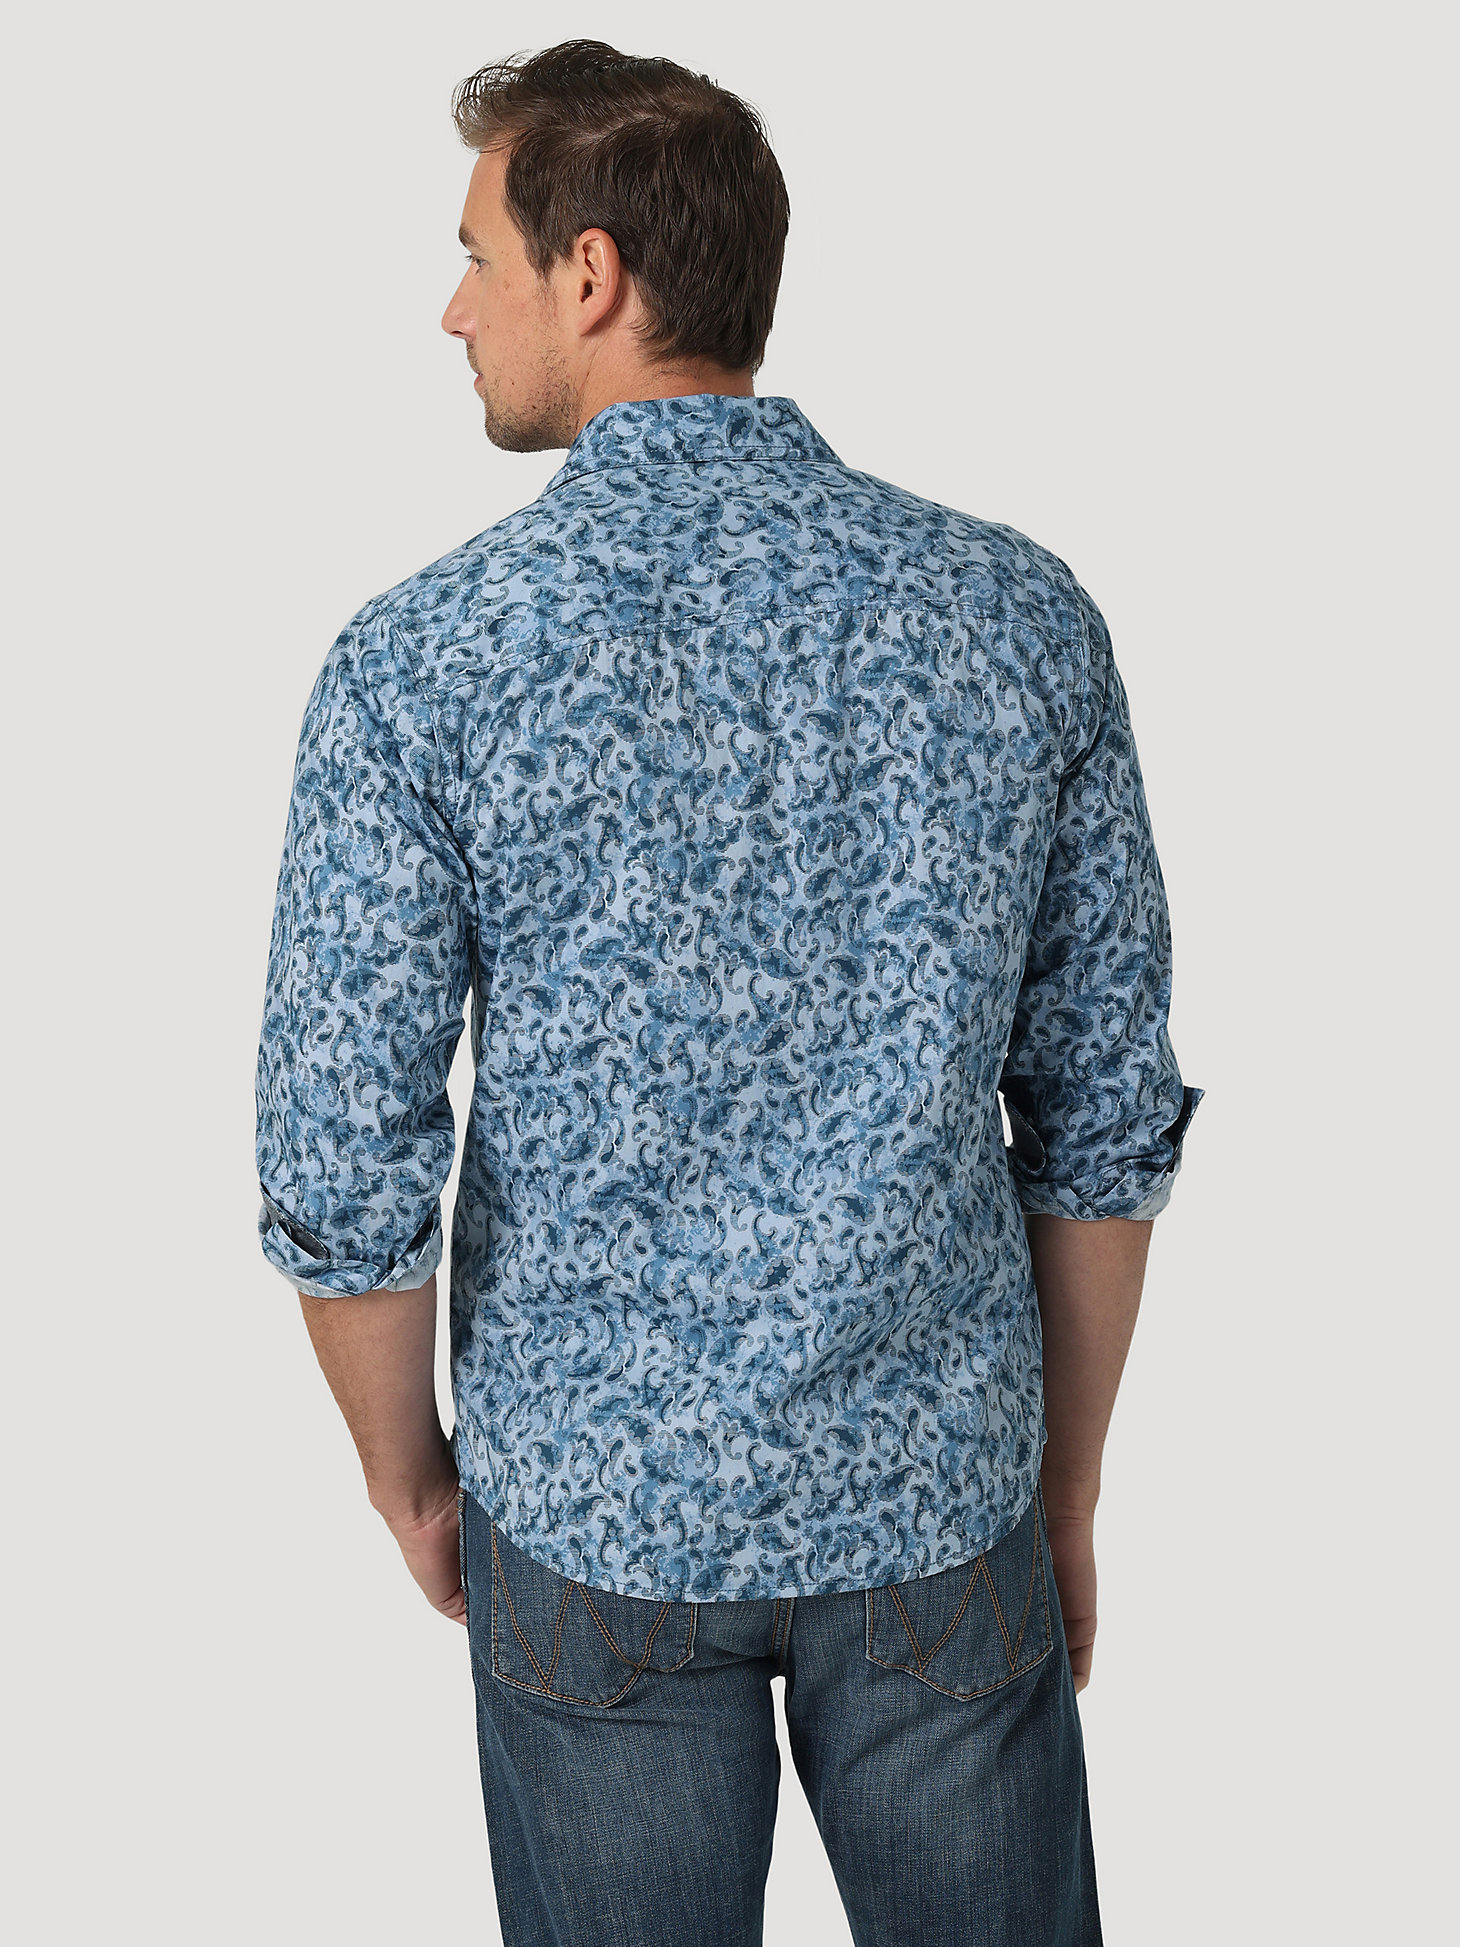 Men's Wrangler Retro® Premium Long Sleeve Button-Down Print Shirt in Washed Paisley alternative view 1